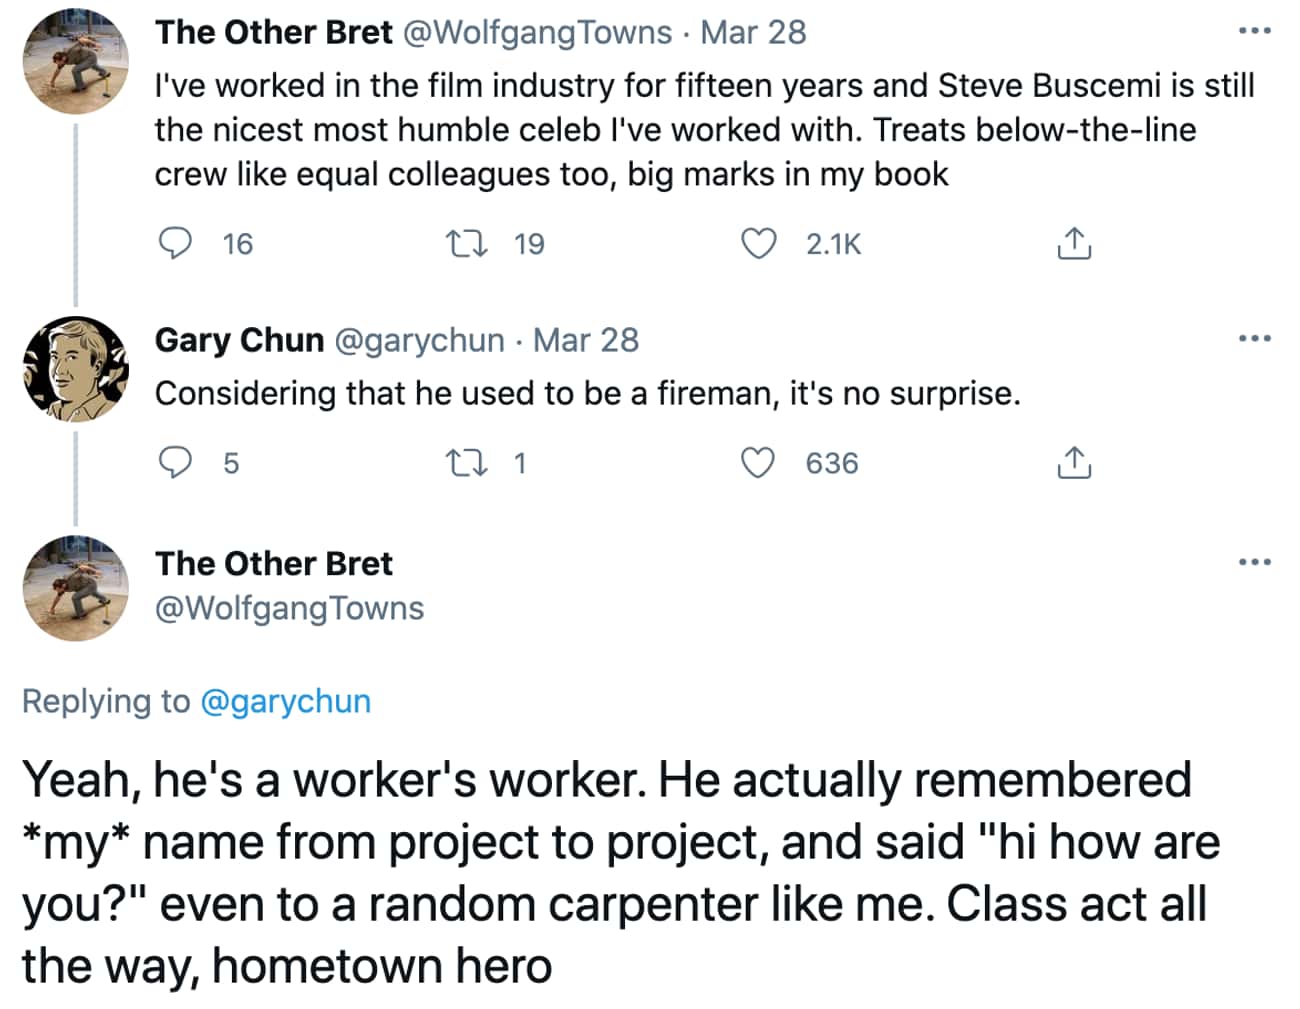 Steve Buscemi Is A 'Hometown Hero'